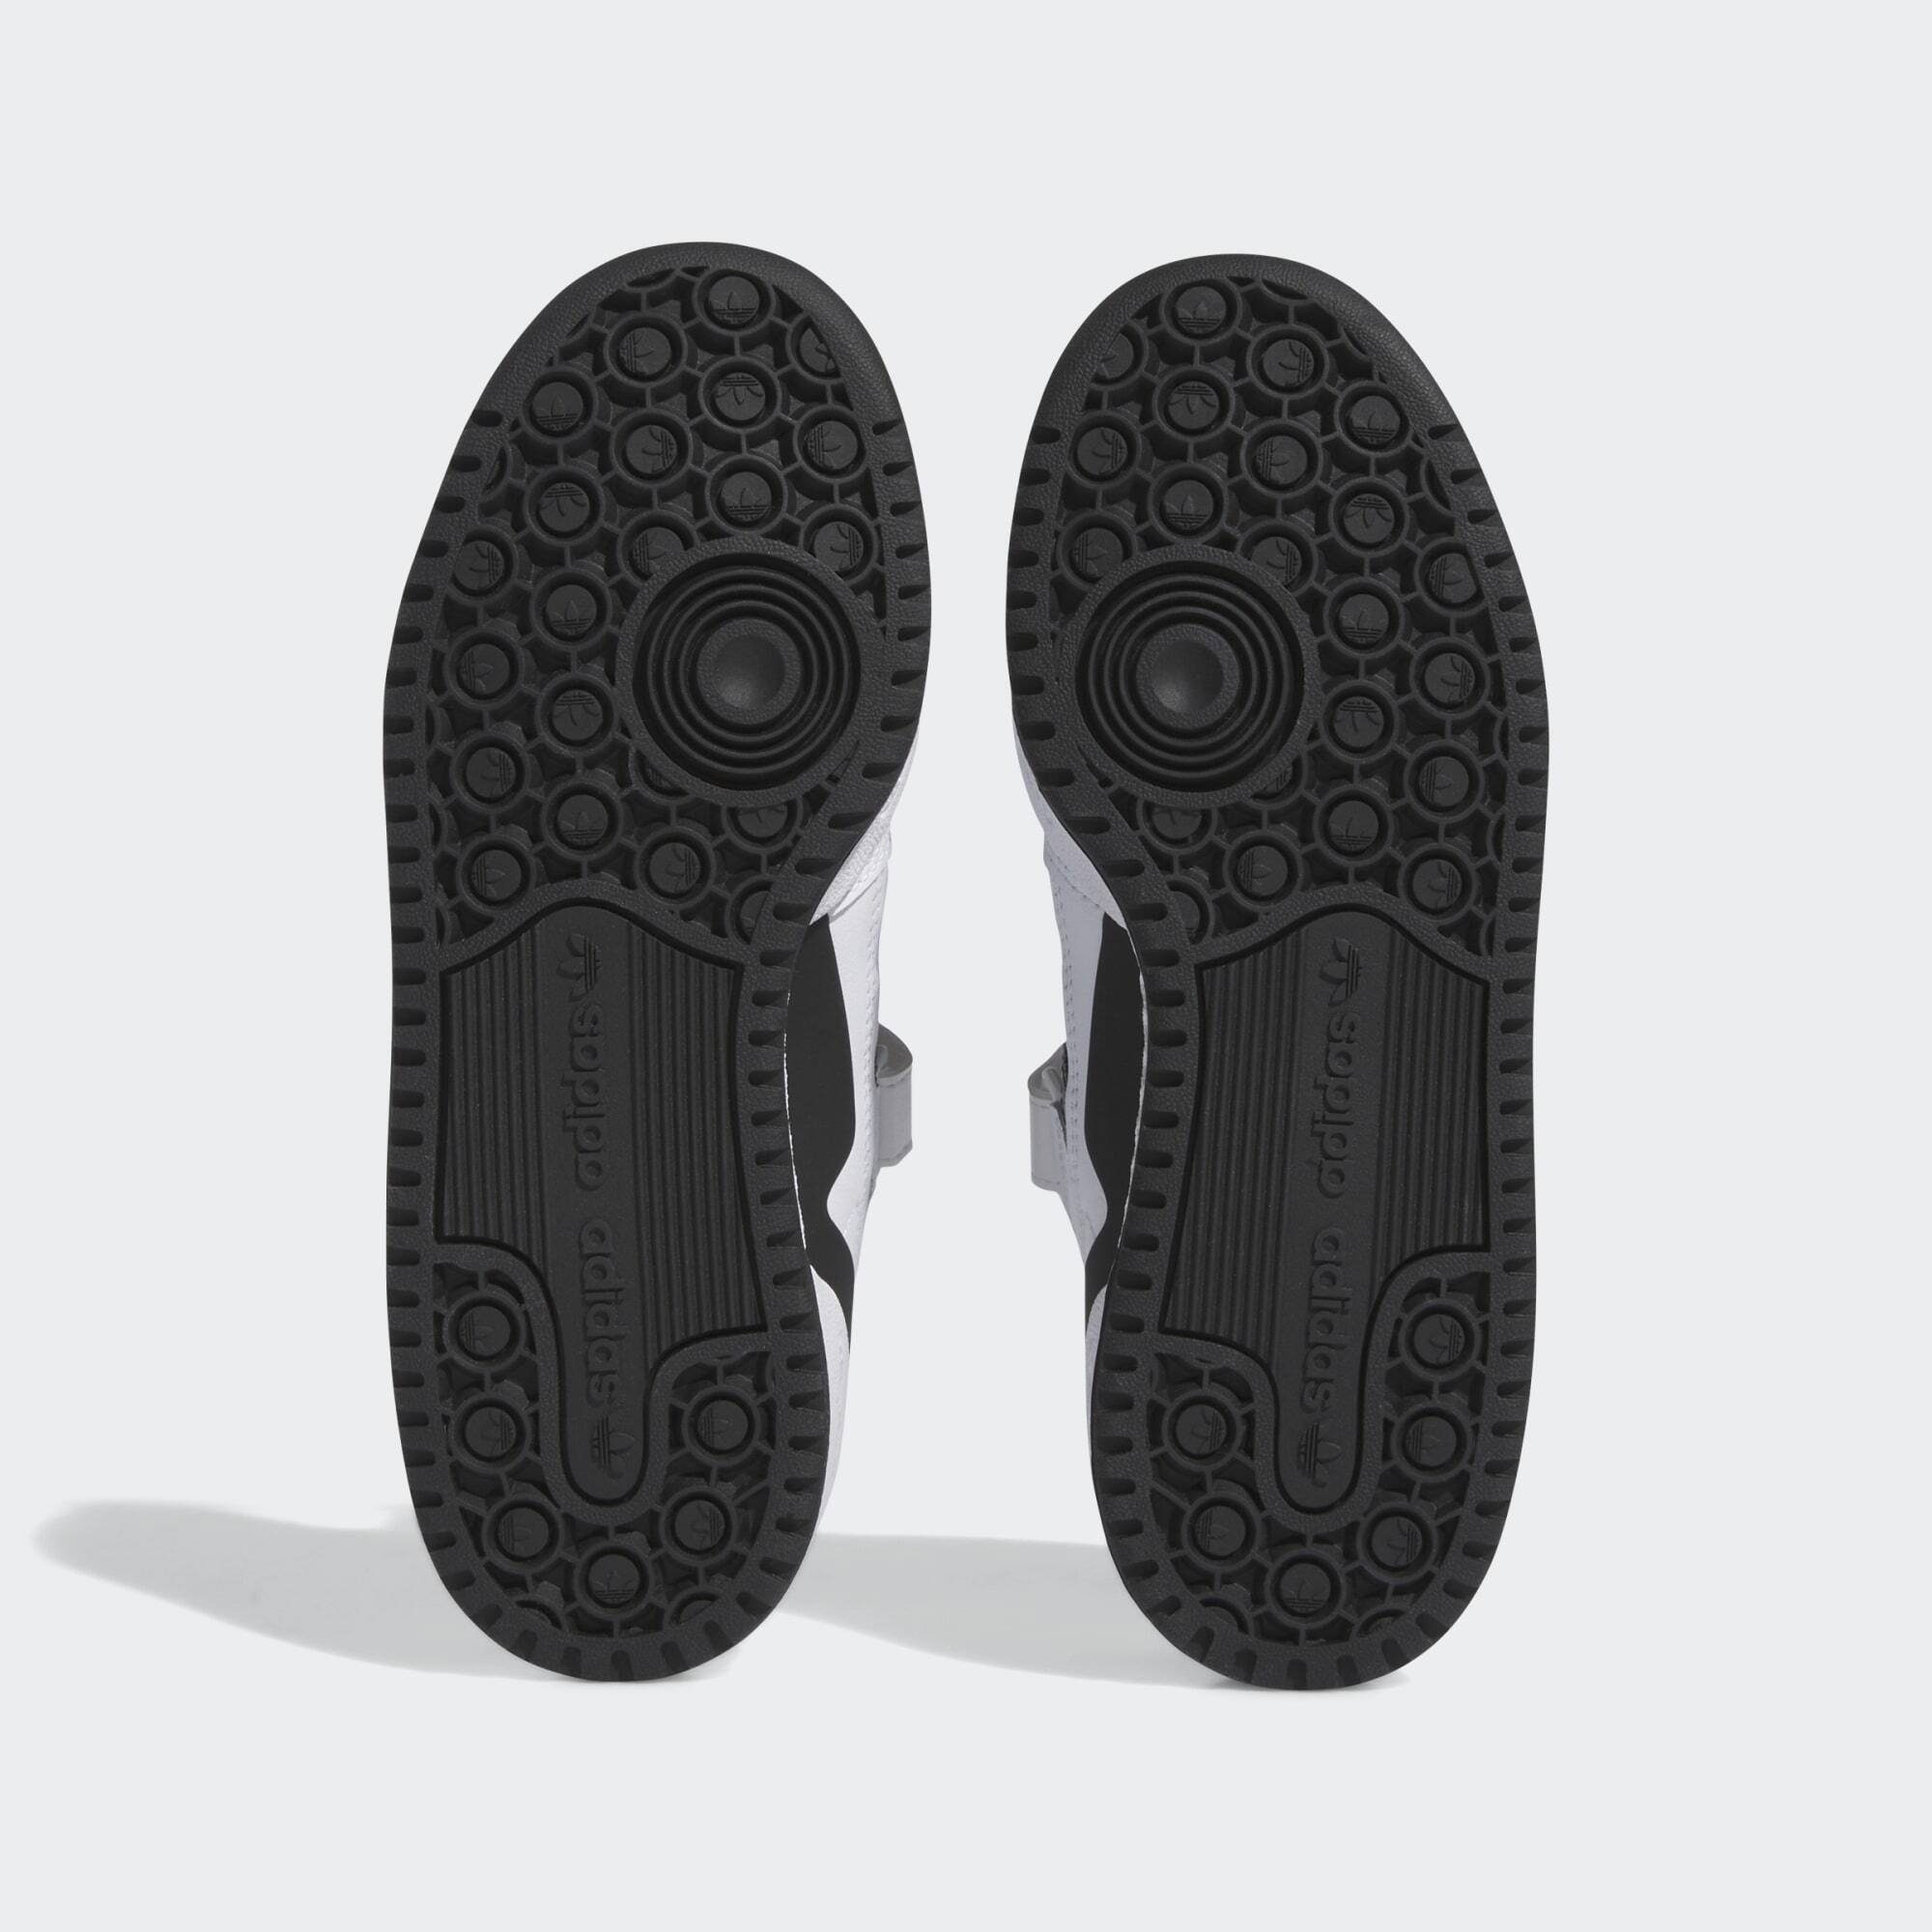 Sneaker LOW Originals White Cloud Black SCHUH Black adidas FORUM / Core Core /